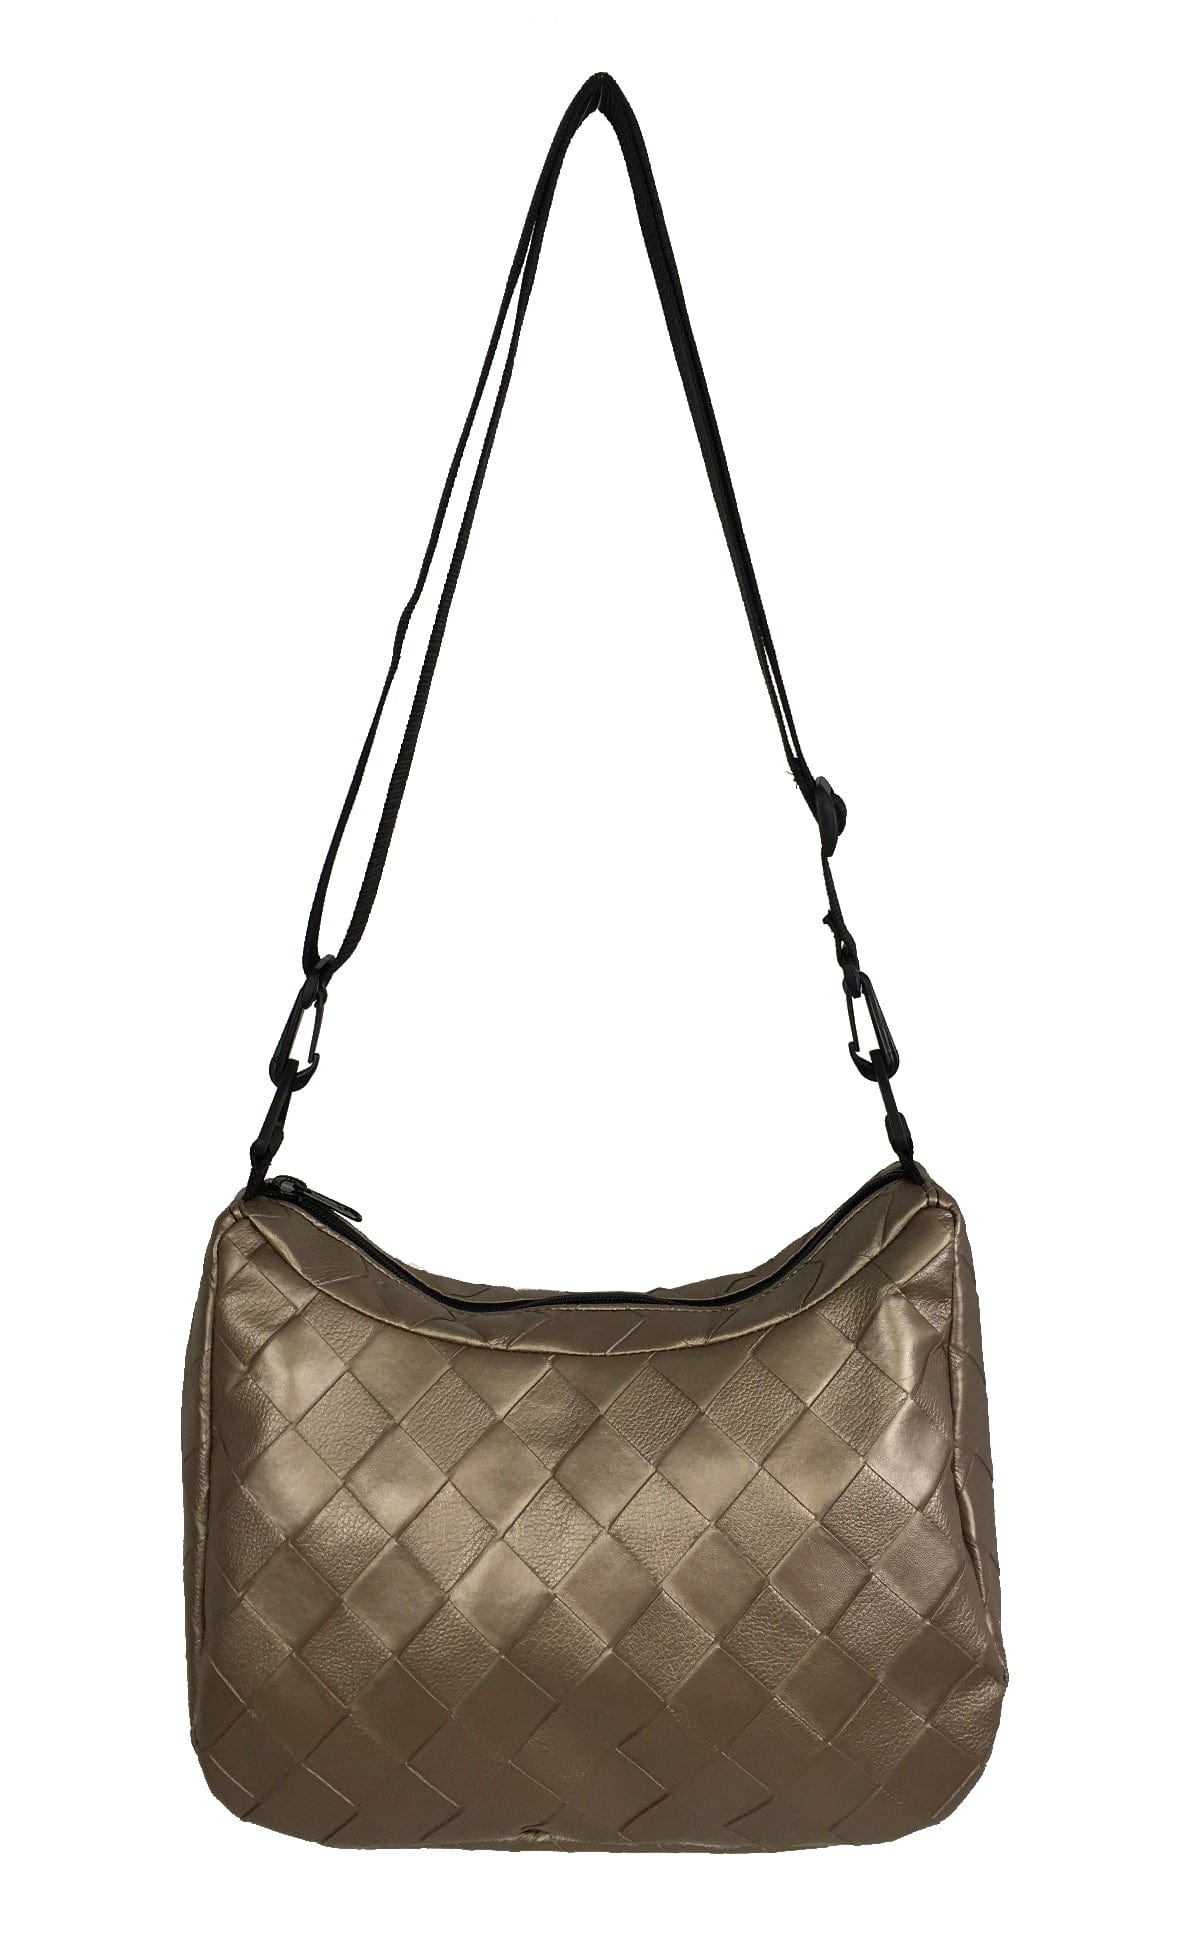 Spokane Diamond Stitched Leather Texture Weekender Bag - Shiny Brown